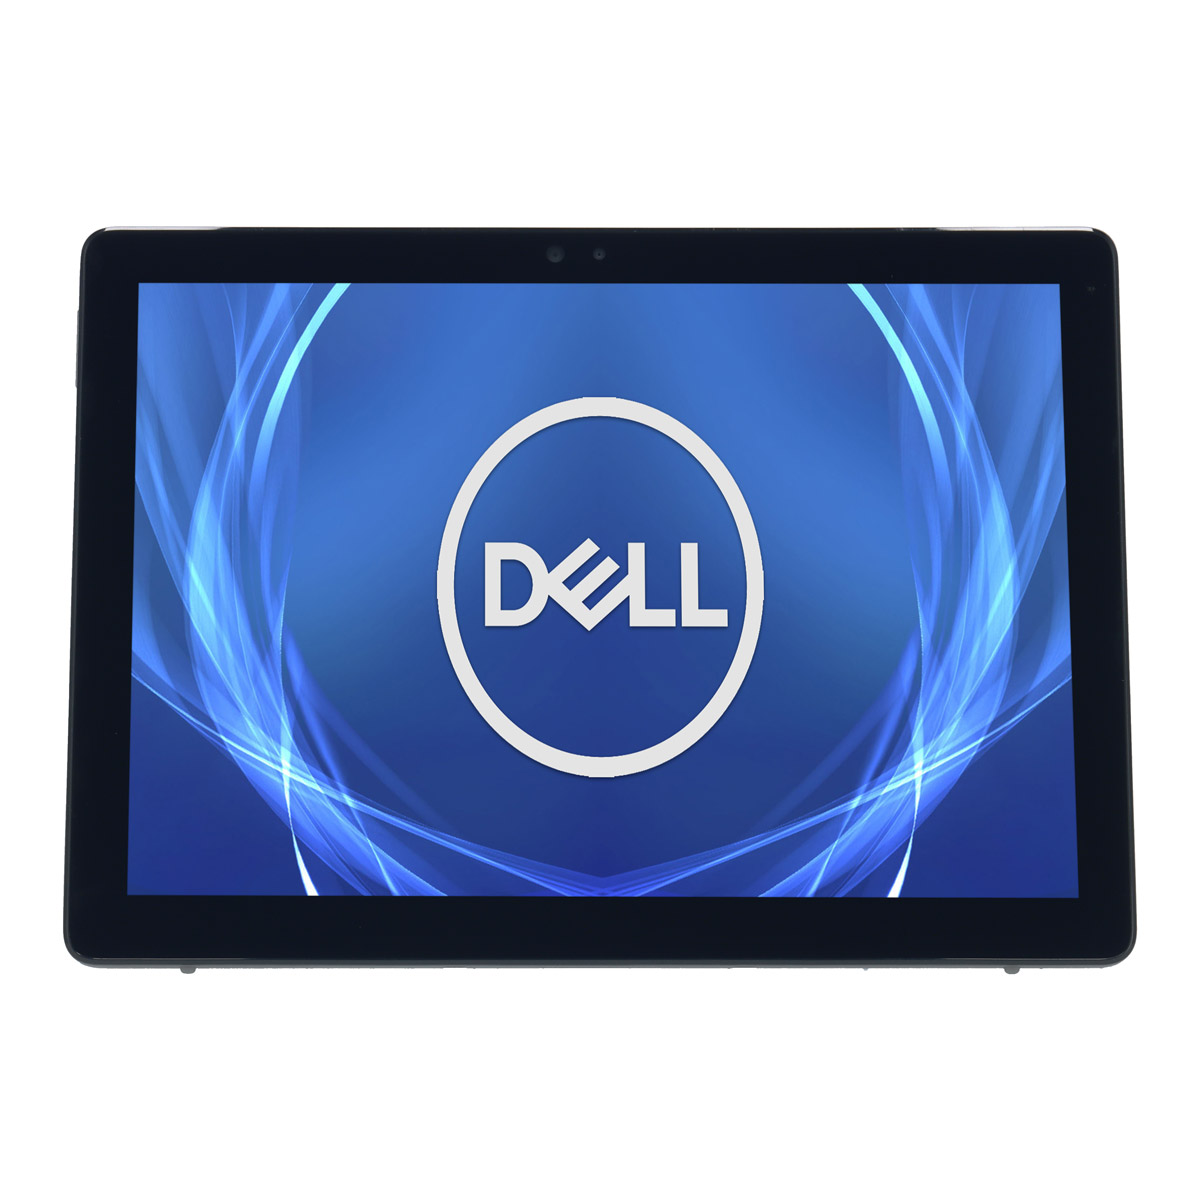 Dell Latitude 7200 2-in-1 Tablet Core i5 8365U 8 GB 500 GB M.2 nVME SSD Webcam B